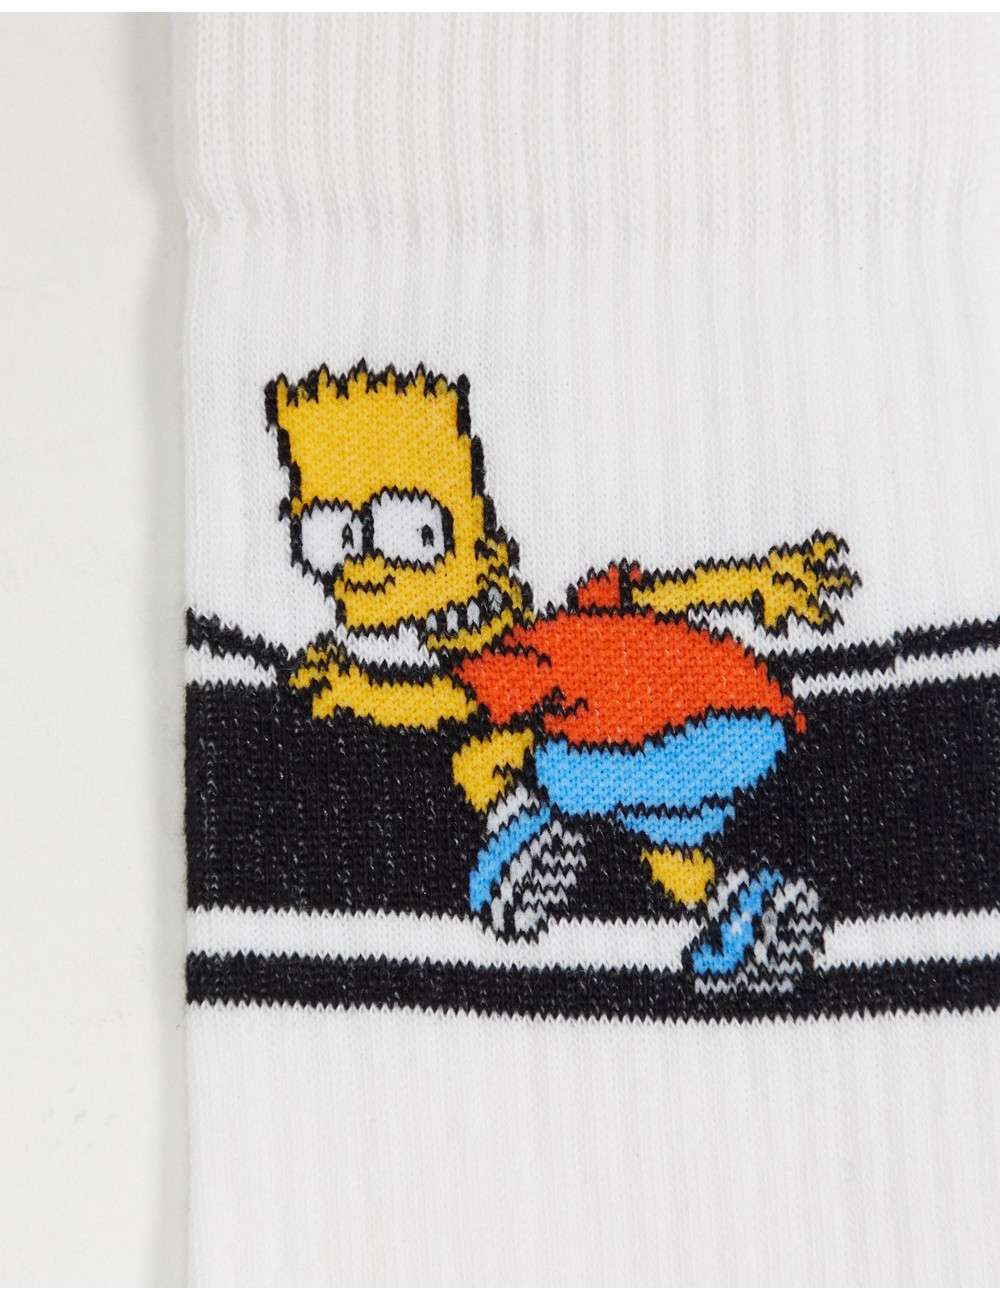 ASOS DESIGN sport socks...